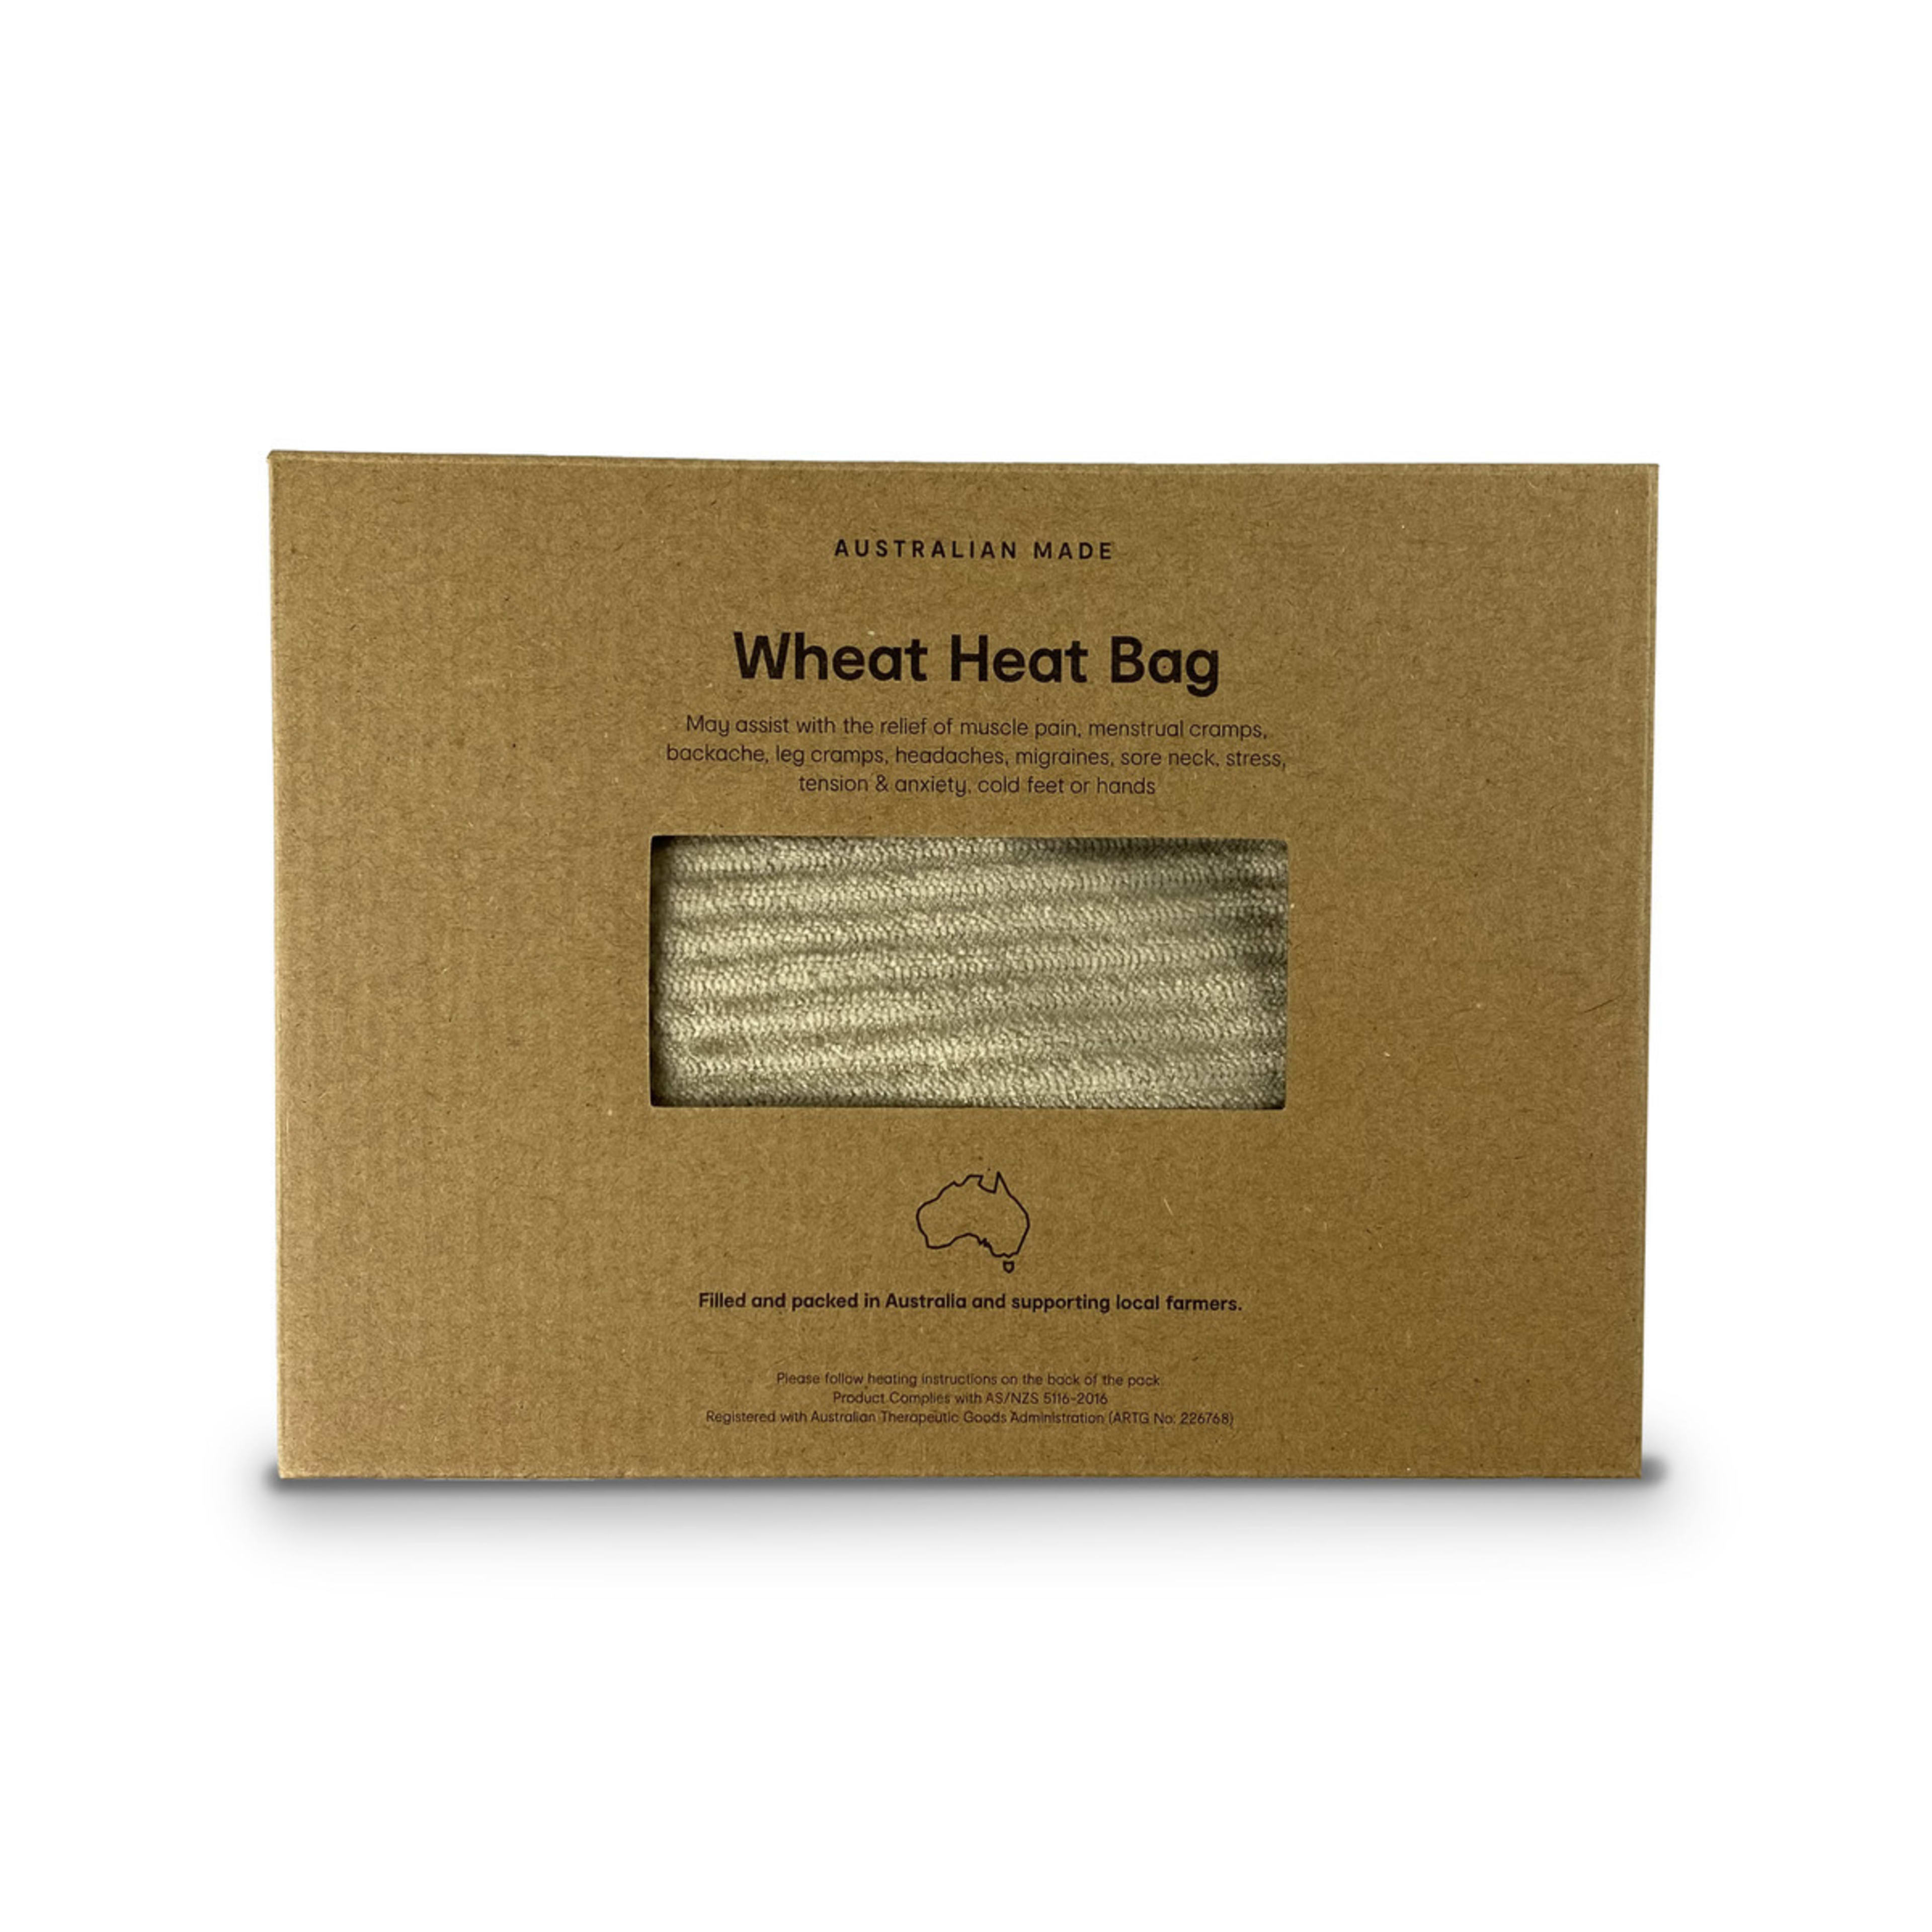 Wheat Heat Bag - Stone - Kmart